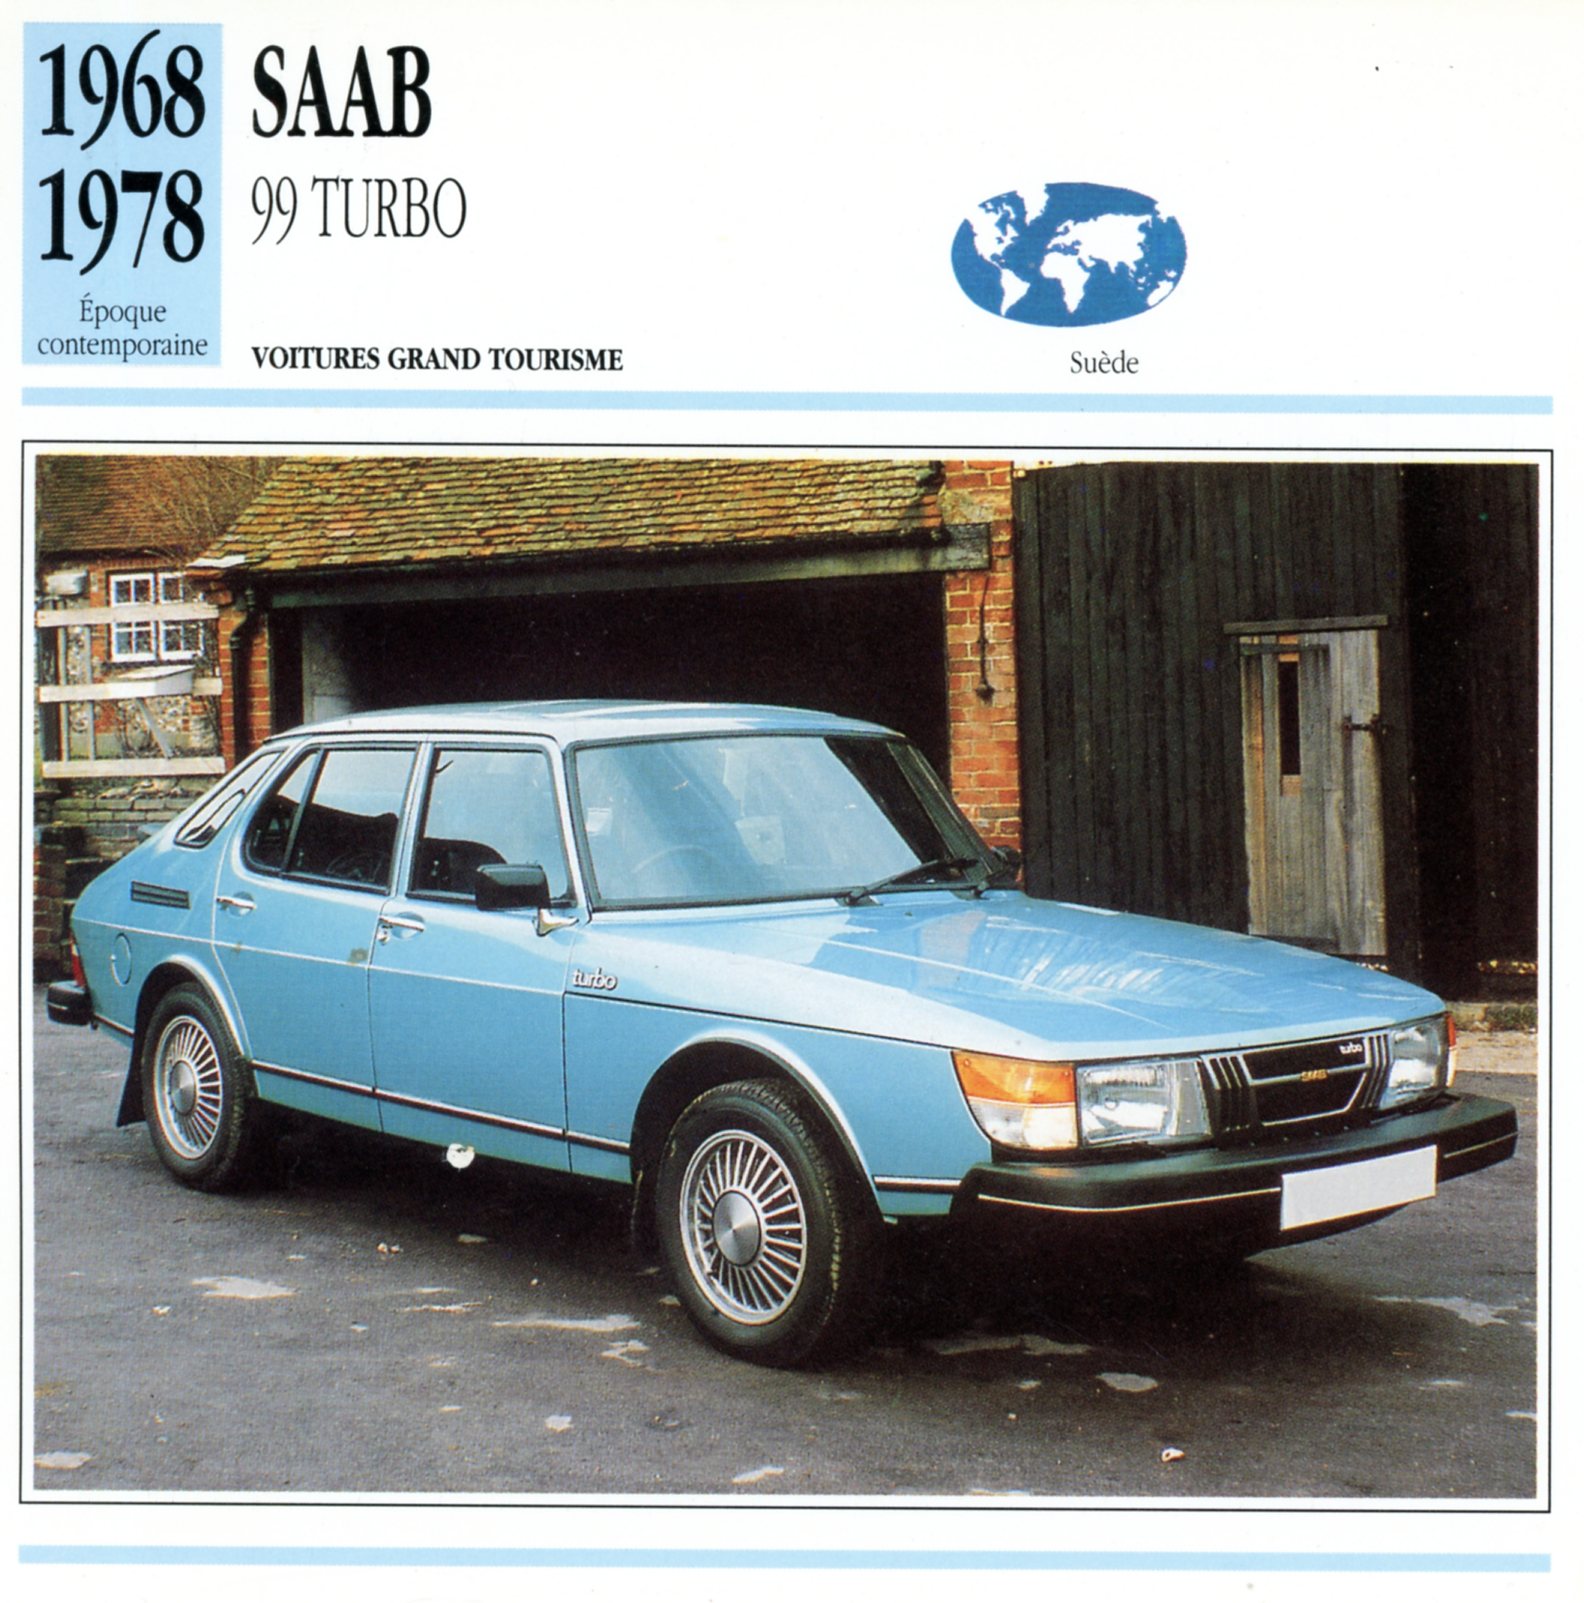 FICHE-AUTO-SAAB-99-TURBO-LEMASTERBROCKERS-CARS-CARD-ATLAS-1978-1968